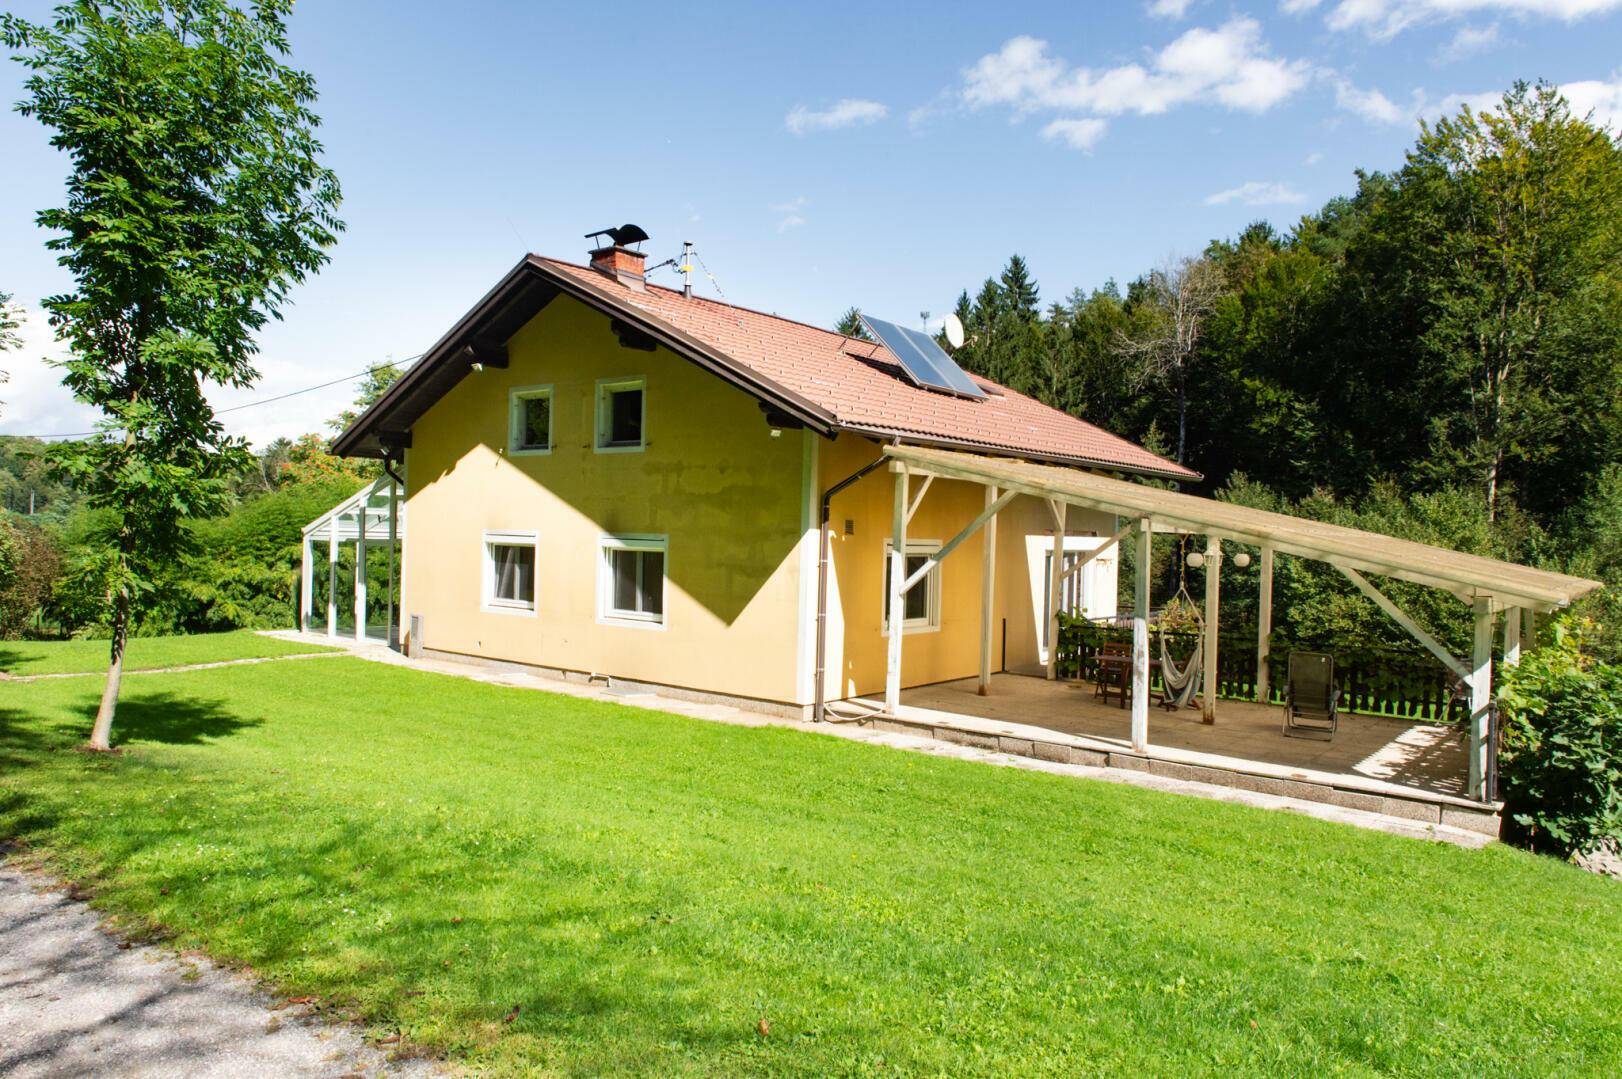 Eigentumshaus - Laßnitzhöhe-36